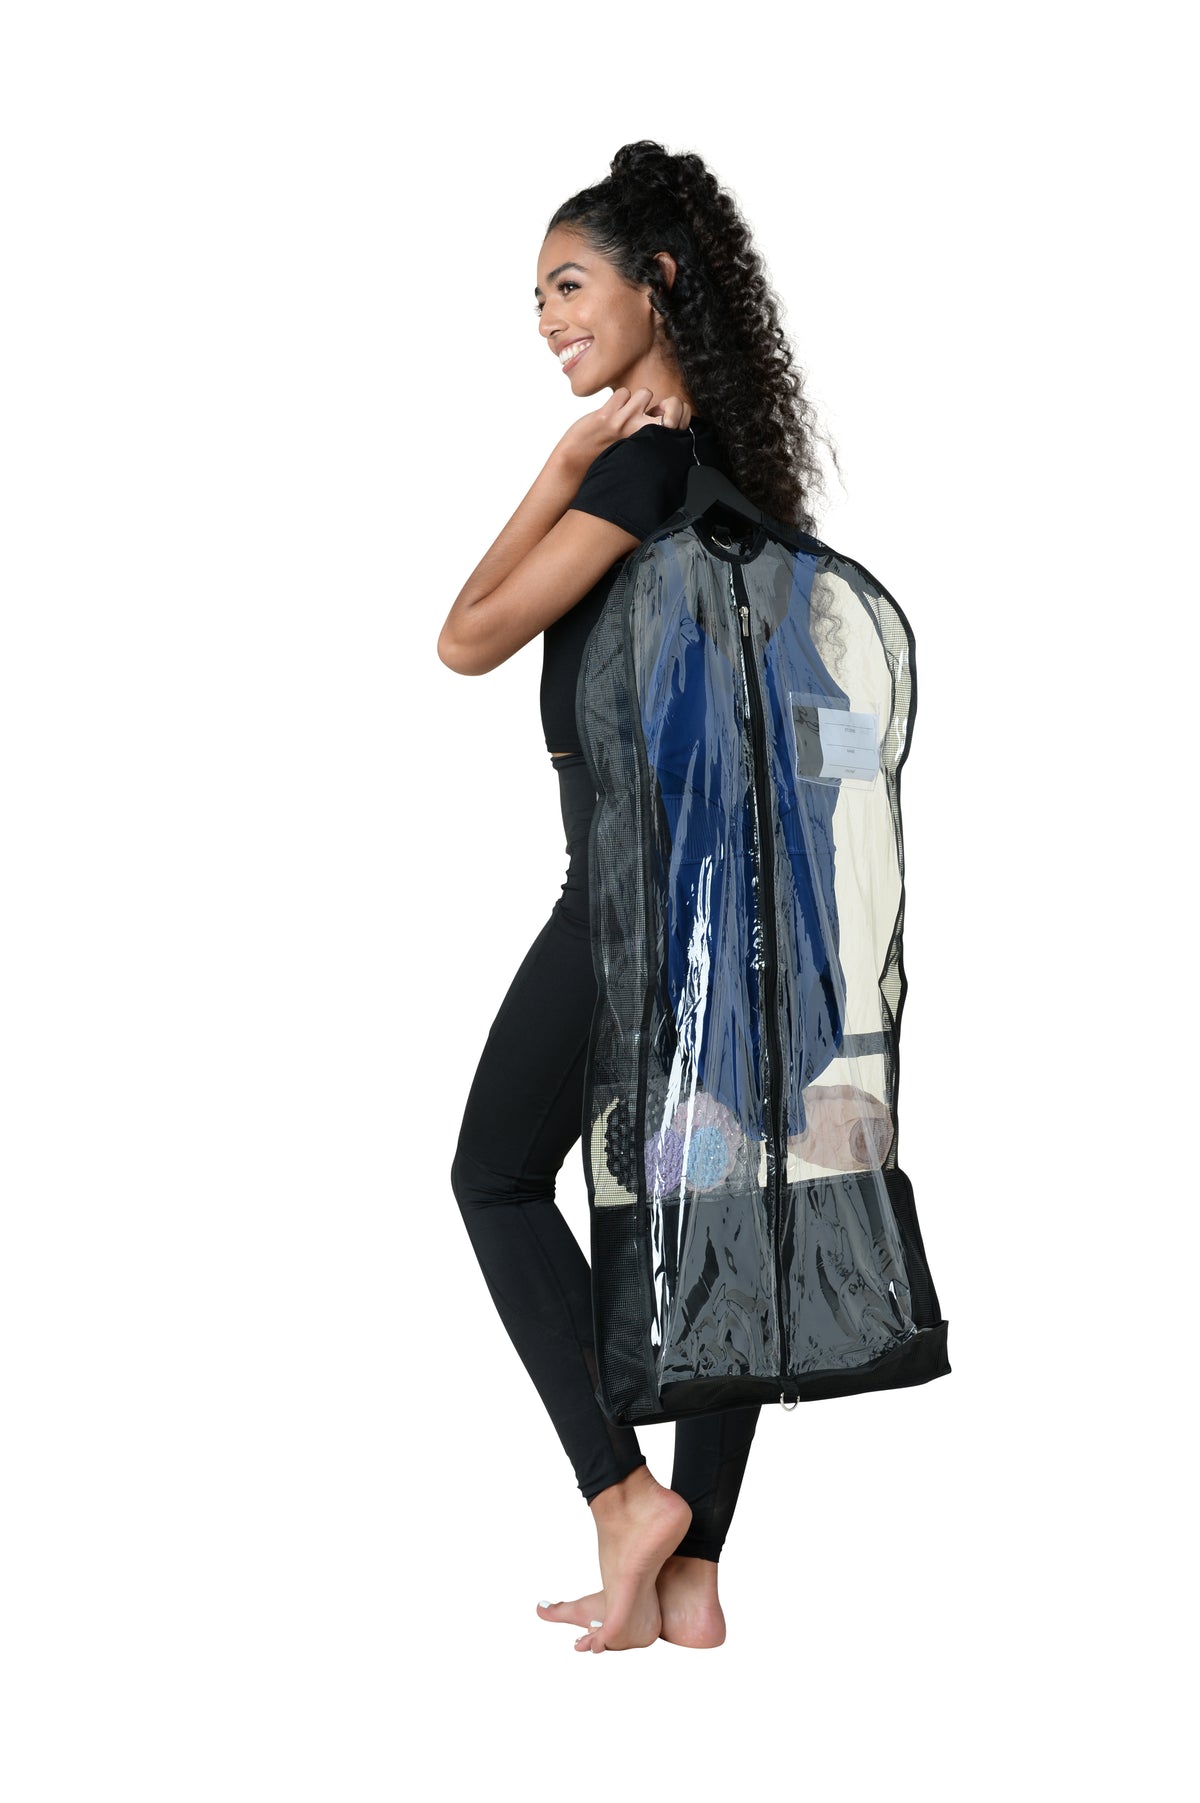 Austok Garment Bags,for Travel Storage, Dance Garment Bags, Moving